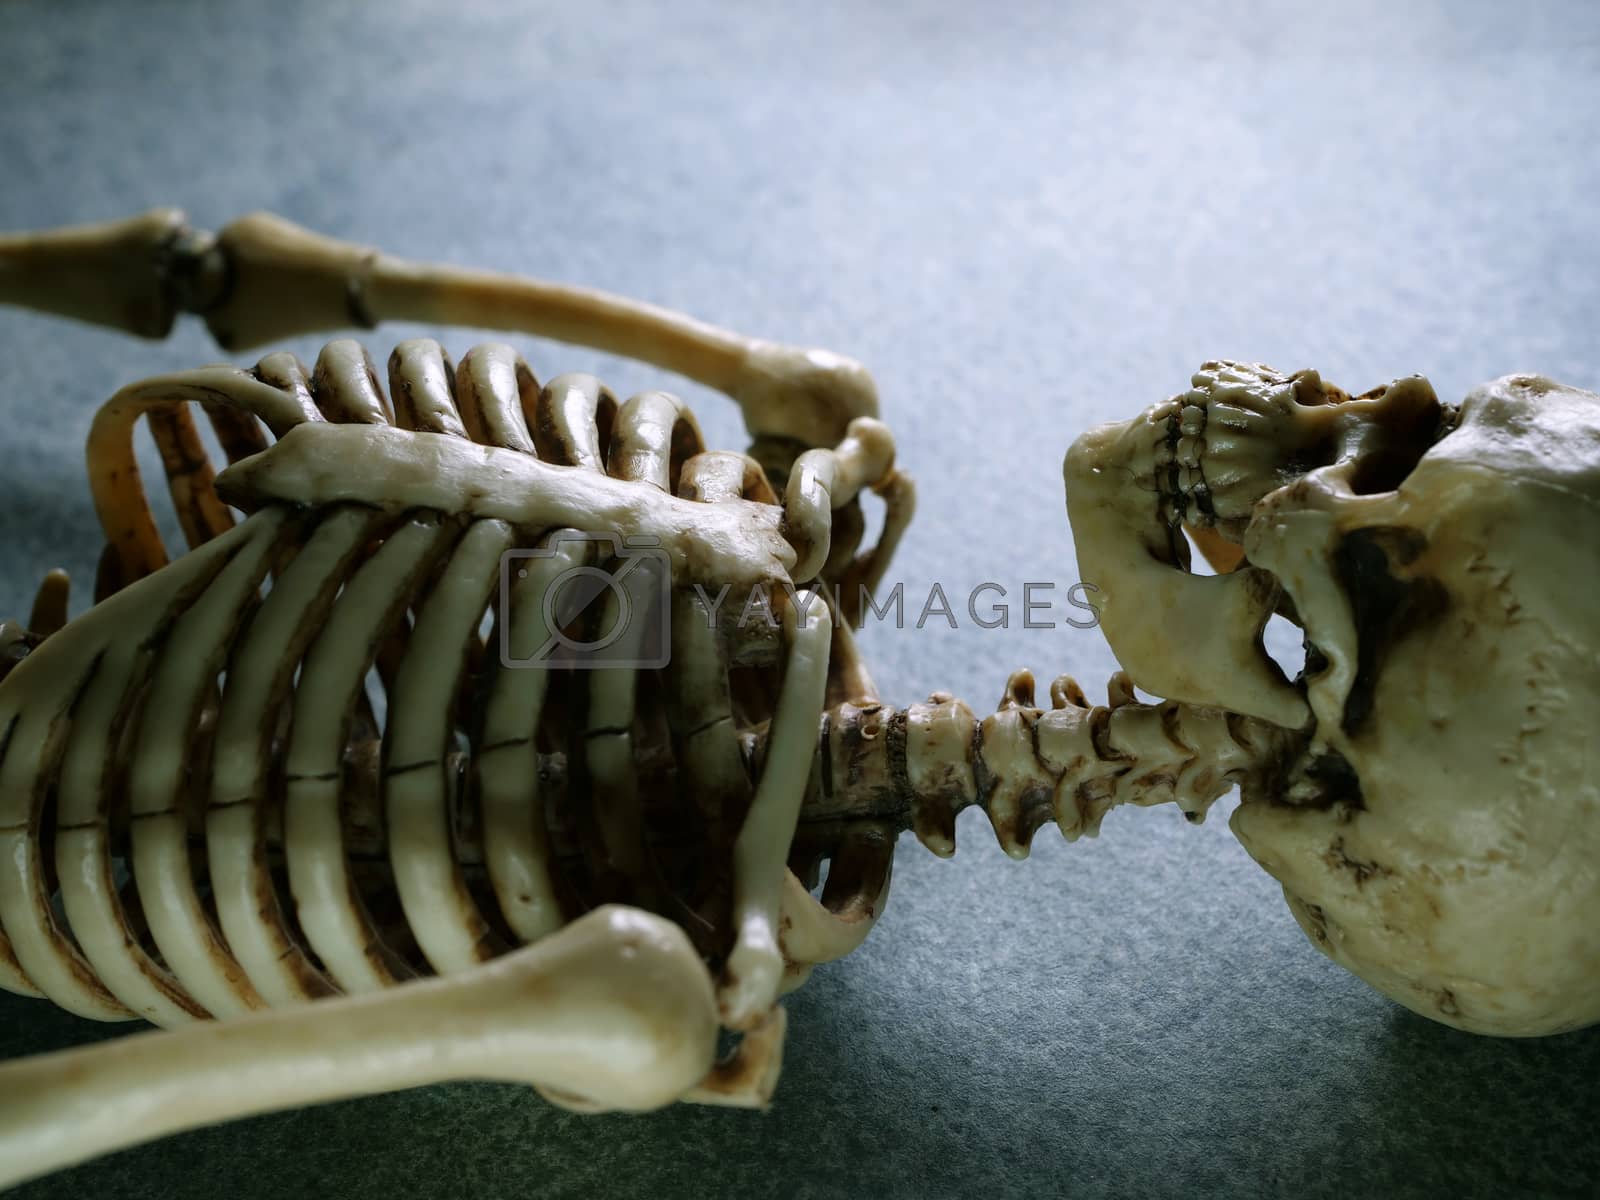 Royalty free image of close Up Human Skeleton by janaka